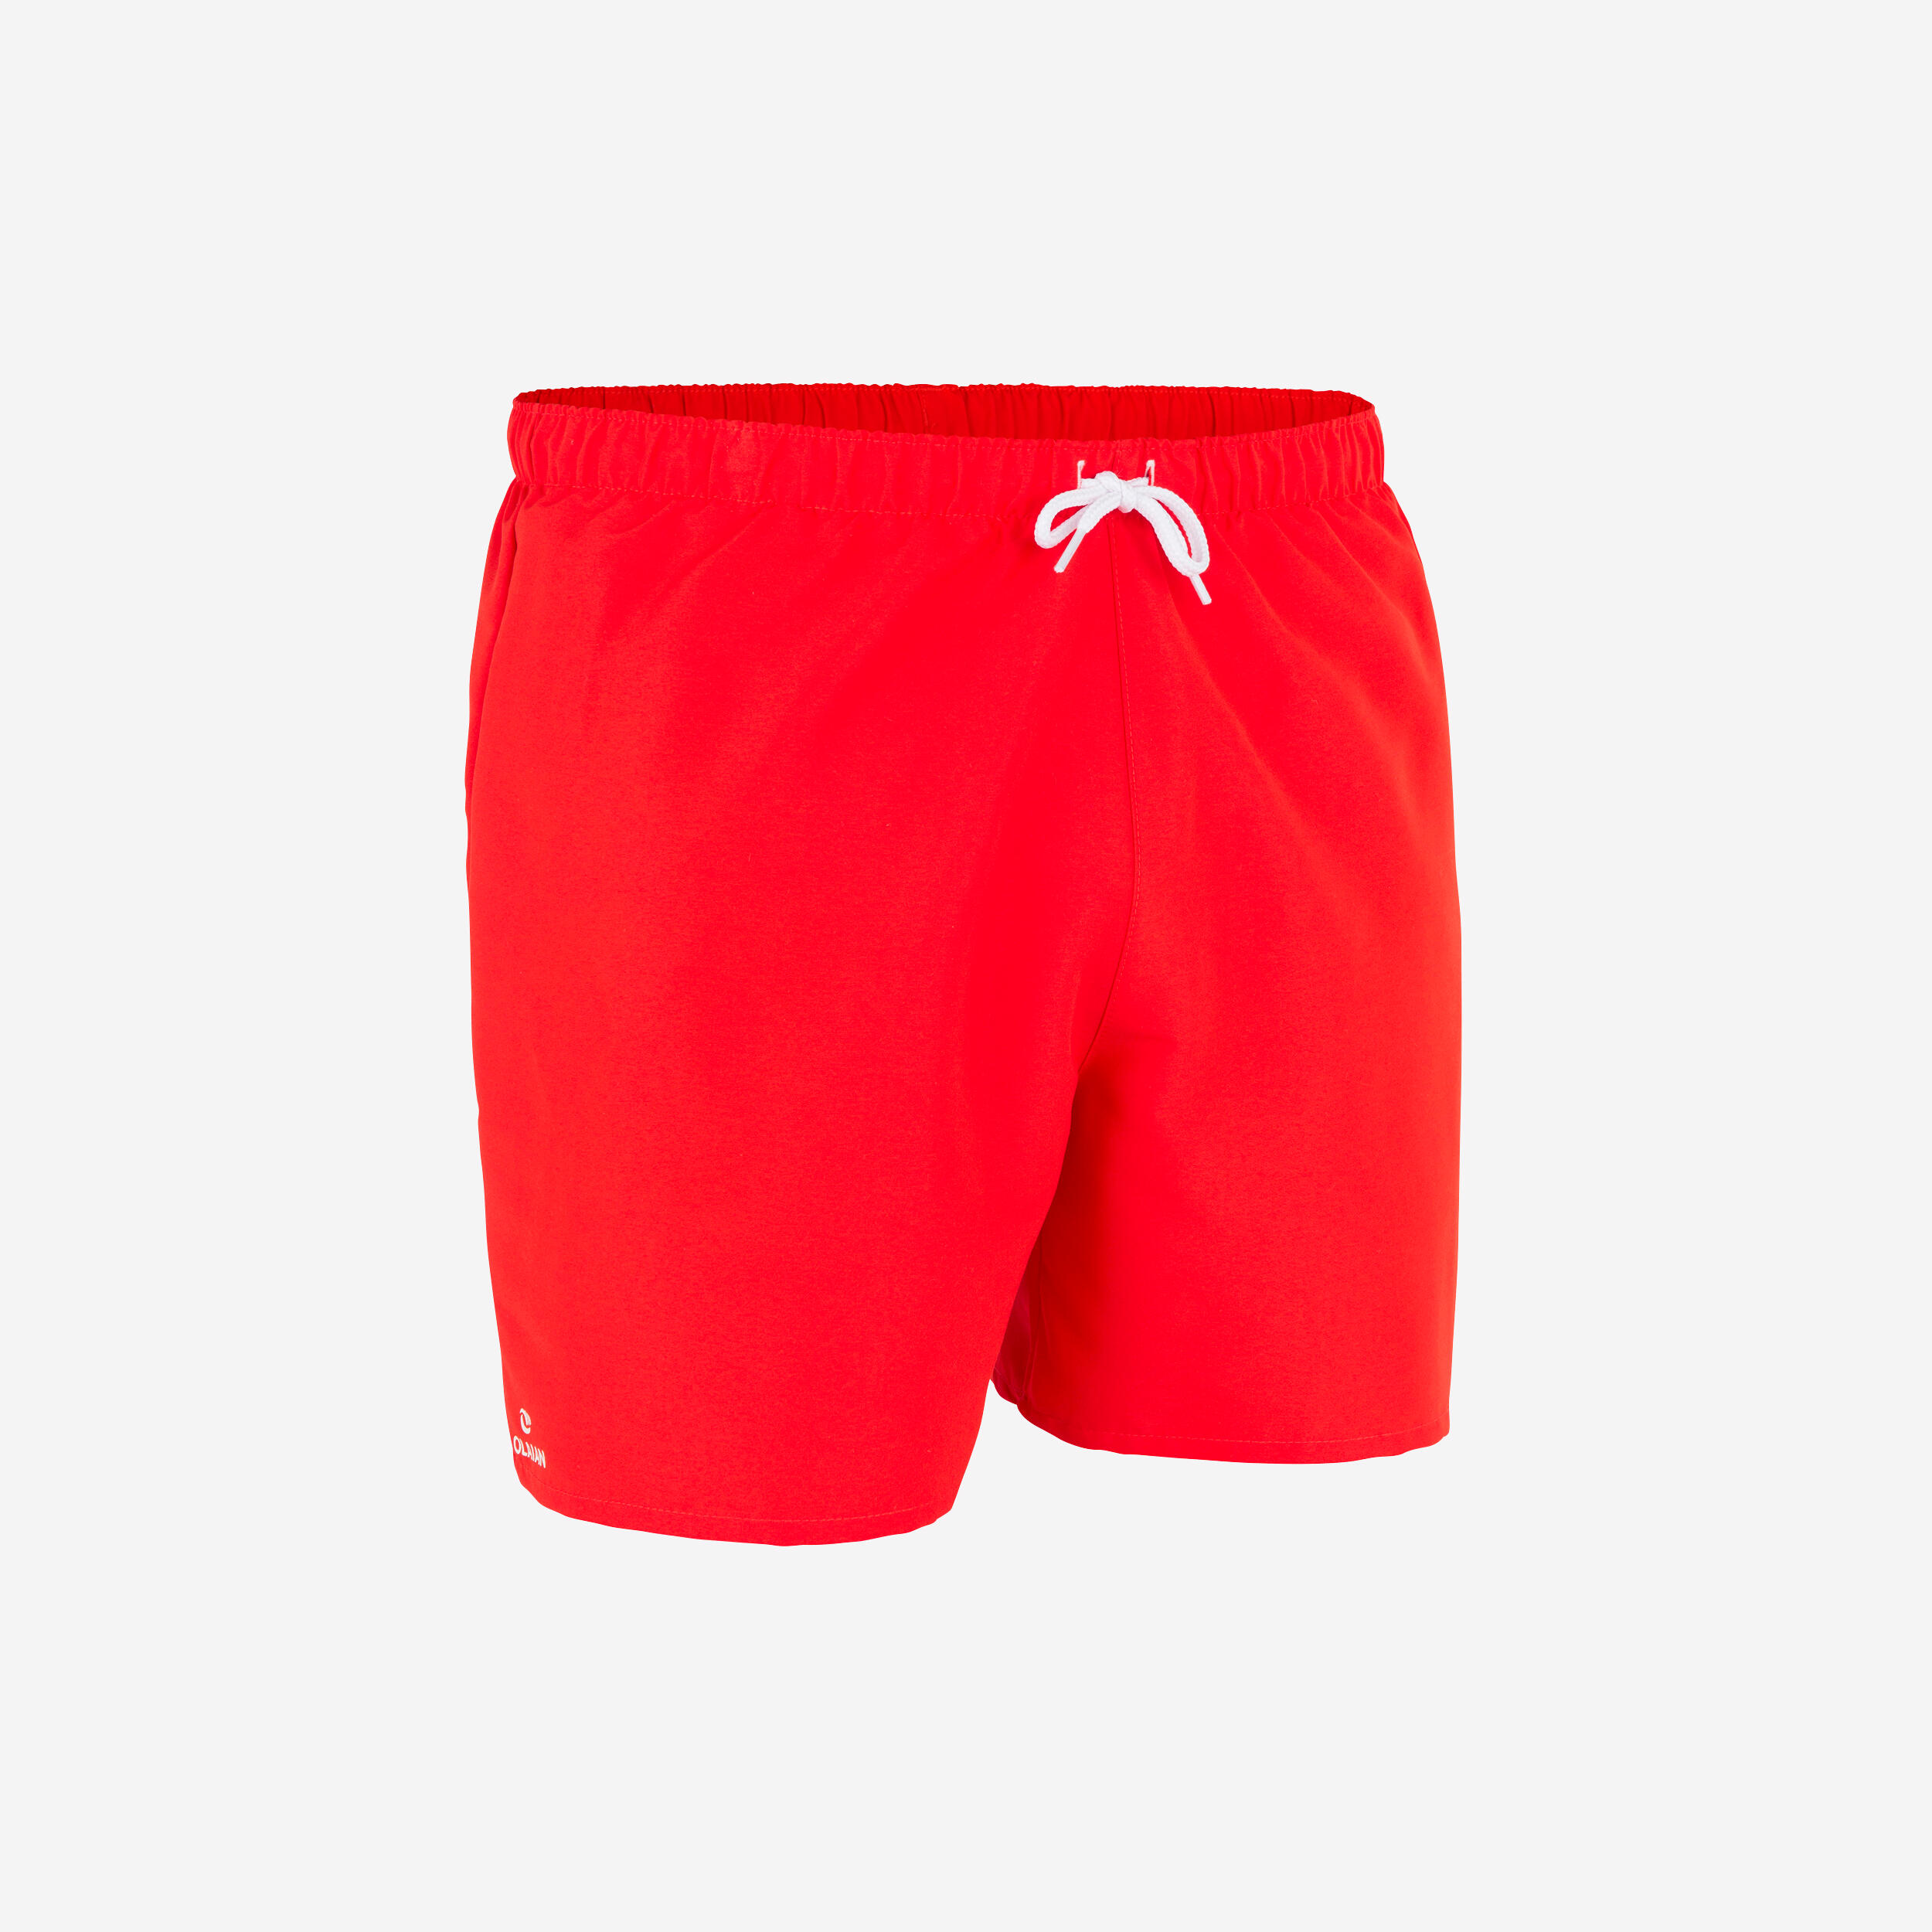 decathlon beach shorts